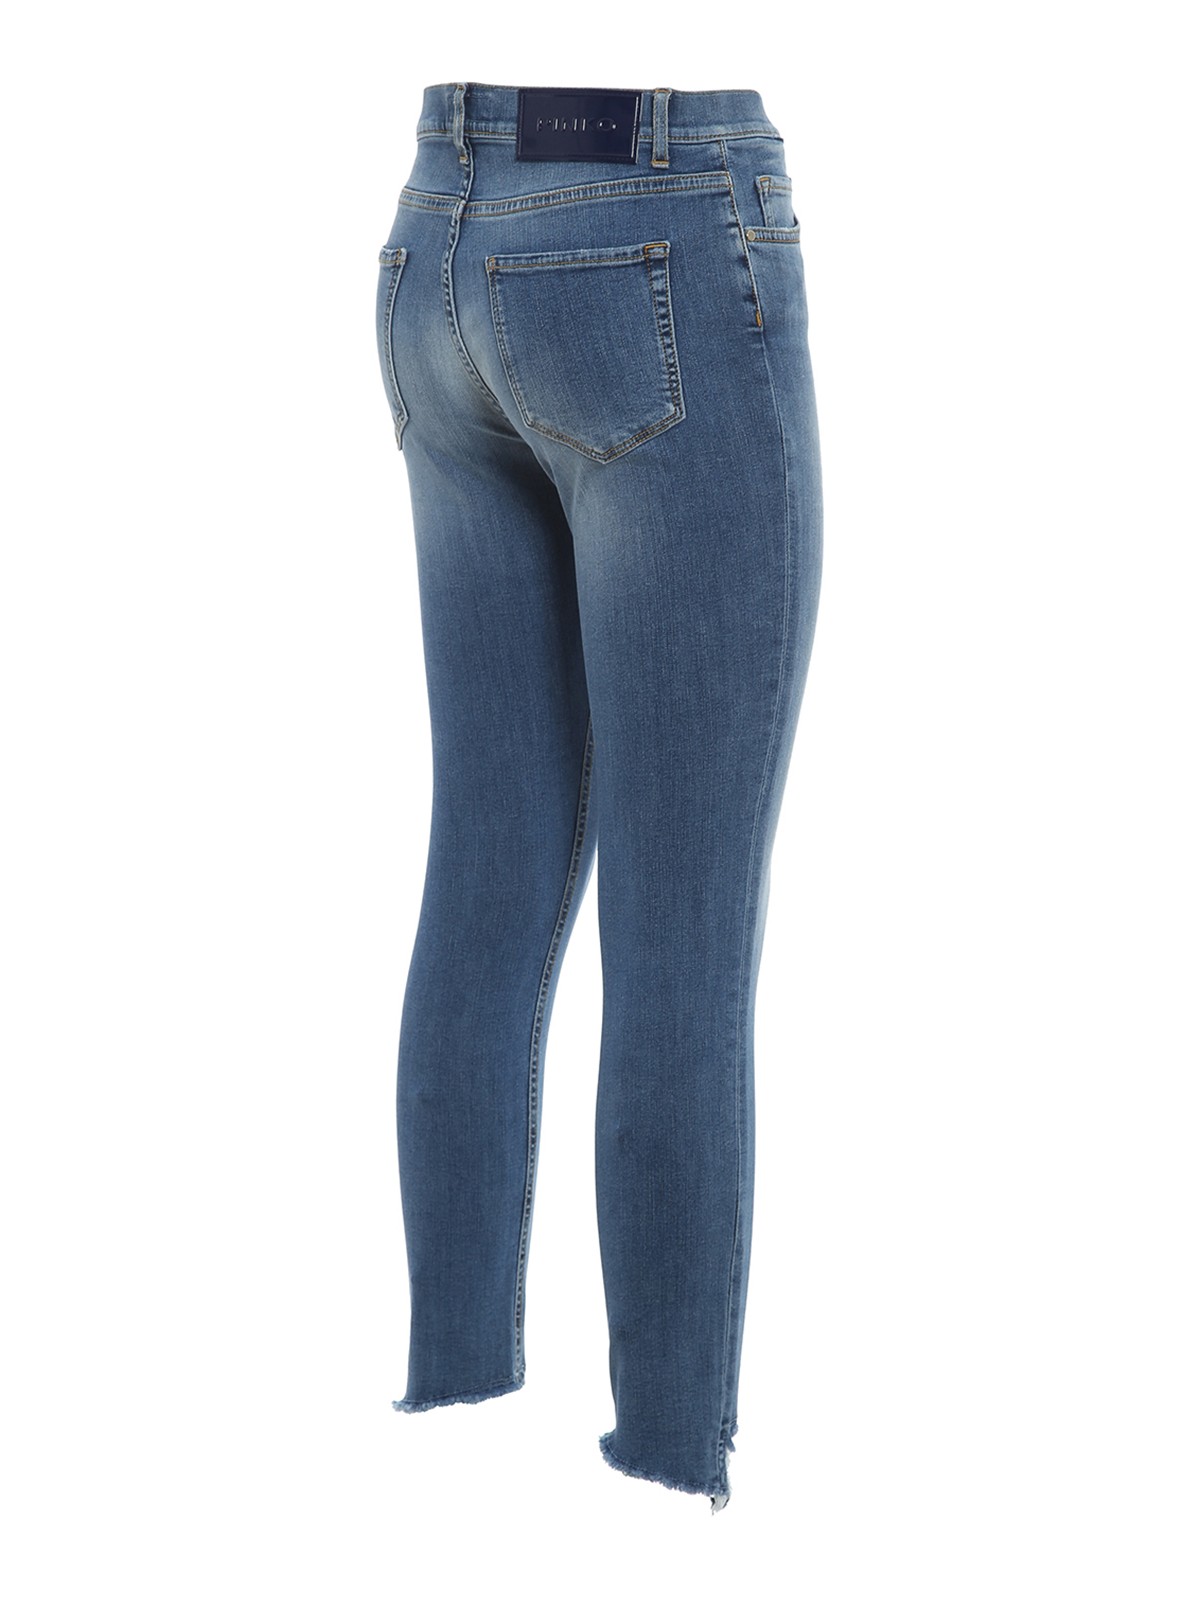 Skinny jeans Pinko - Sabrina jeans - 1J10GLY62MF15 | Shop online at iKRIX